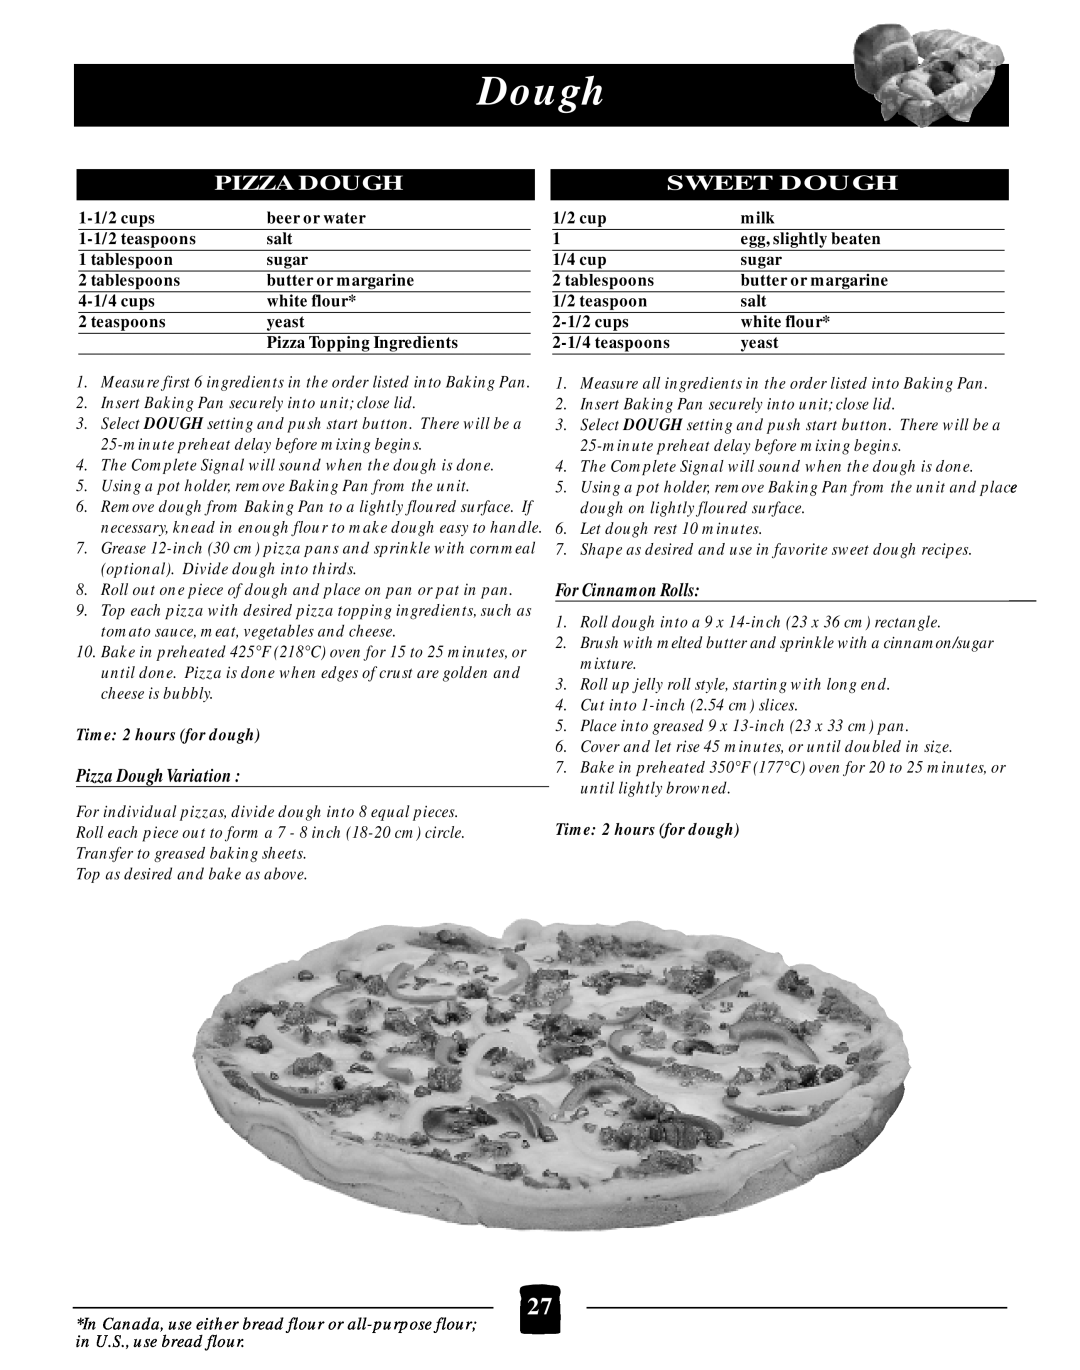 Black & Decker B2005 manual Sweet Dough, For Cinnamon Rolls, Pizza DoughVariation, Time 2 hours for dough 